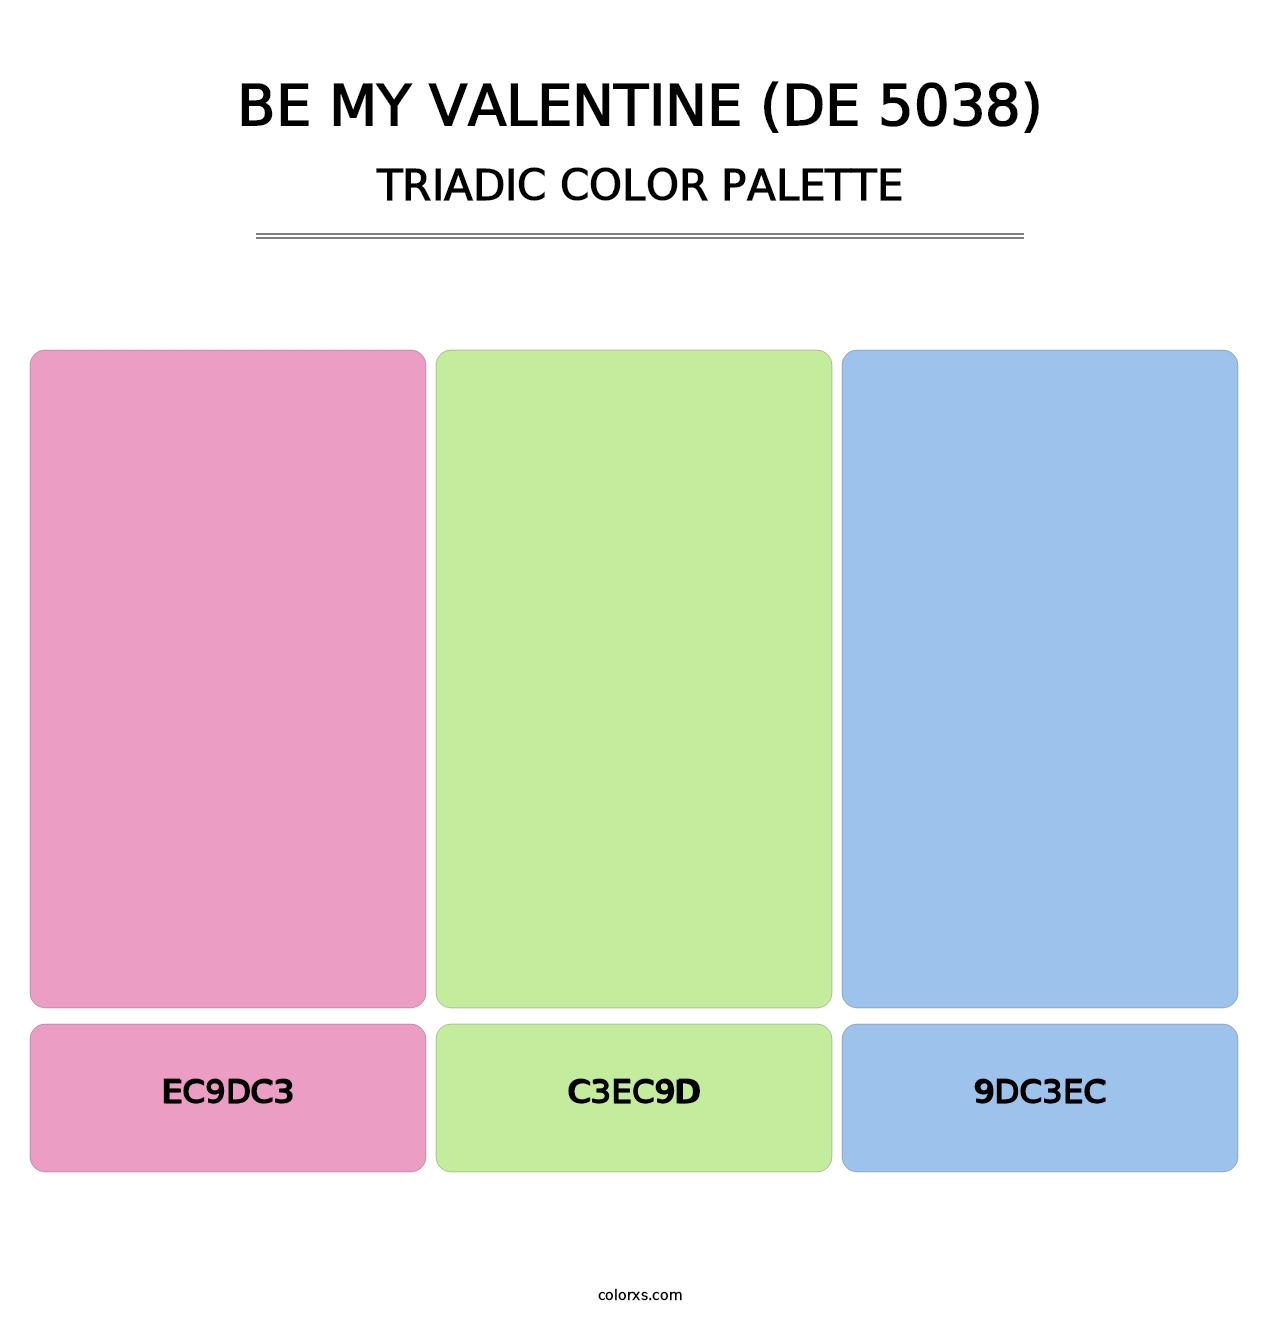 Be My Valentine (DE 5038) - Triadic Color Palette